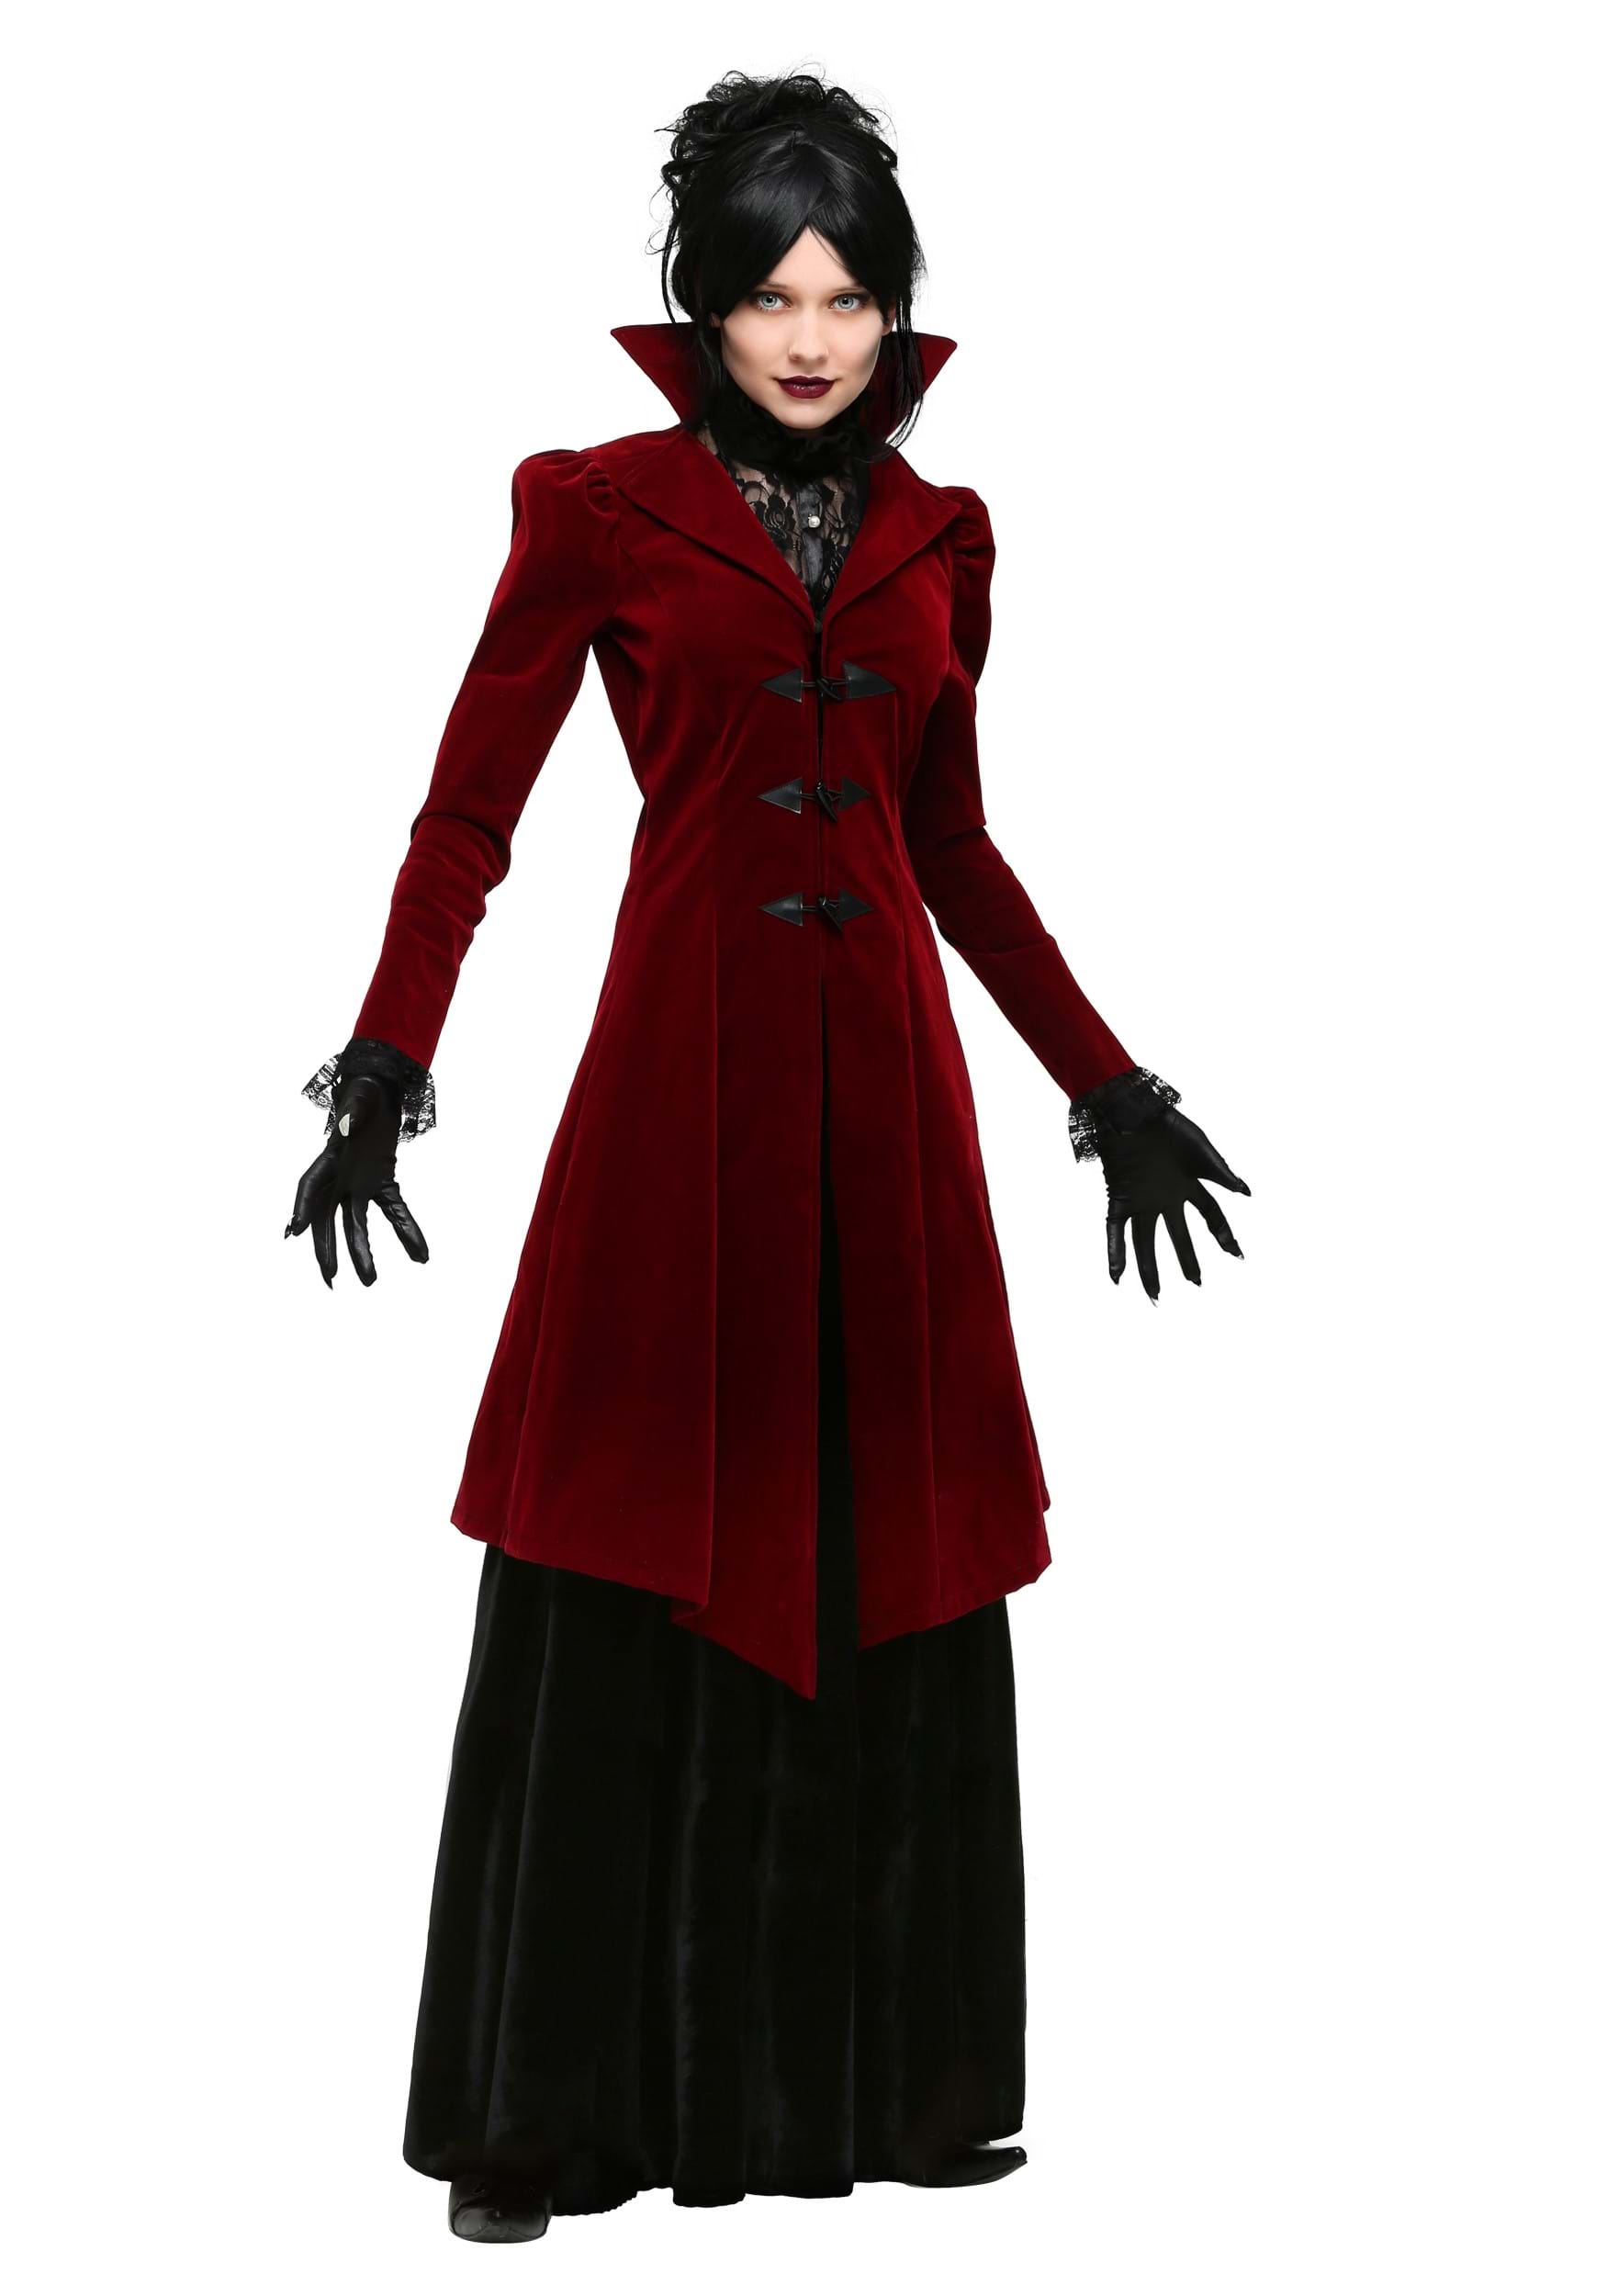 Photos - Fancy Dress FUN Costumes Delightfully Dreadful Vampiress Women's Costume Black/Red